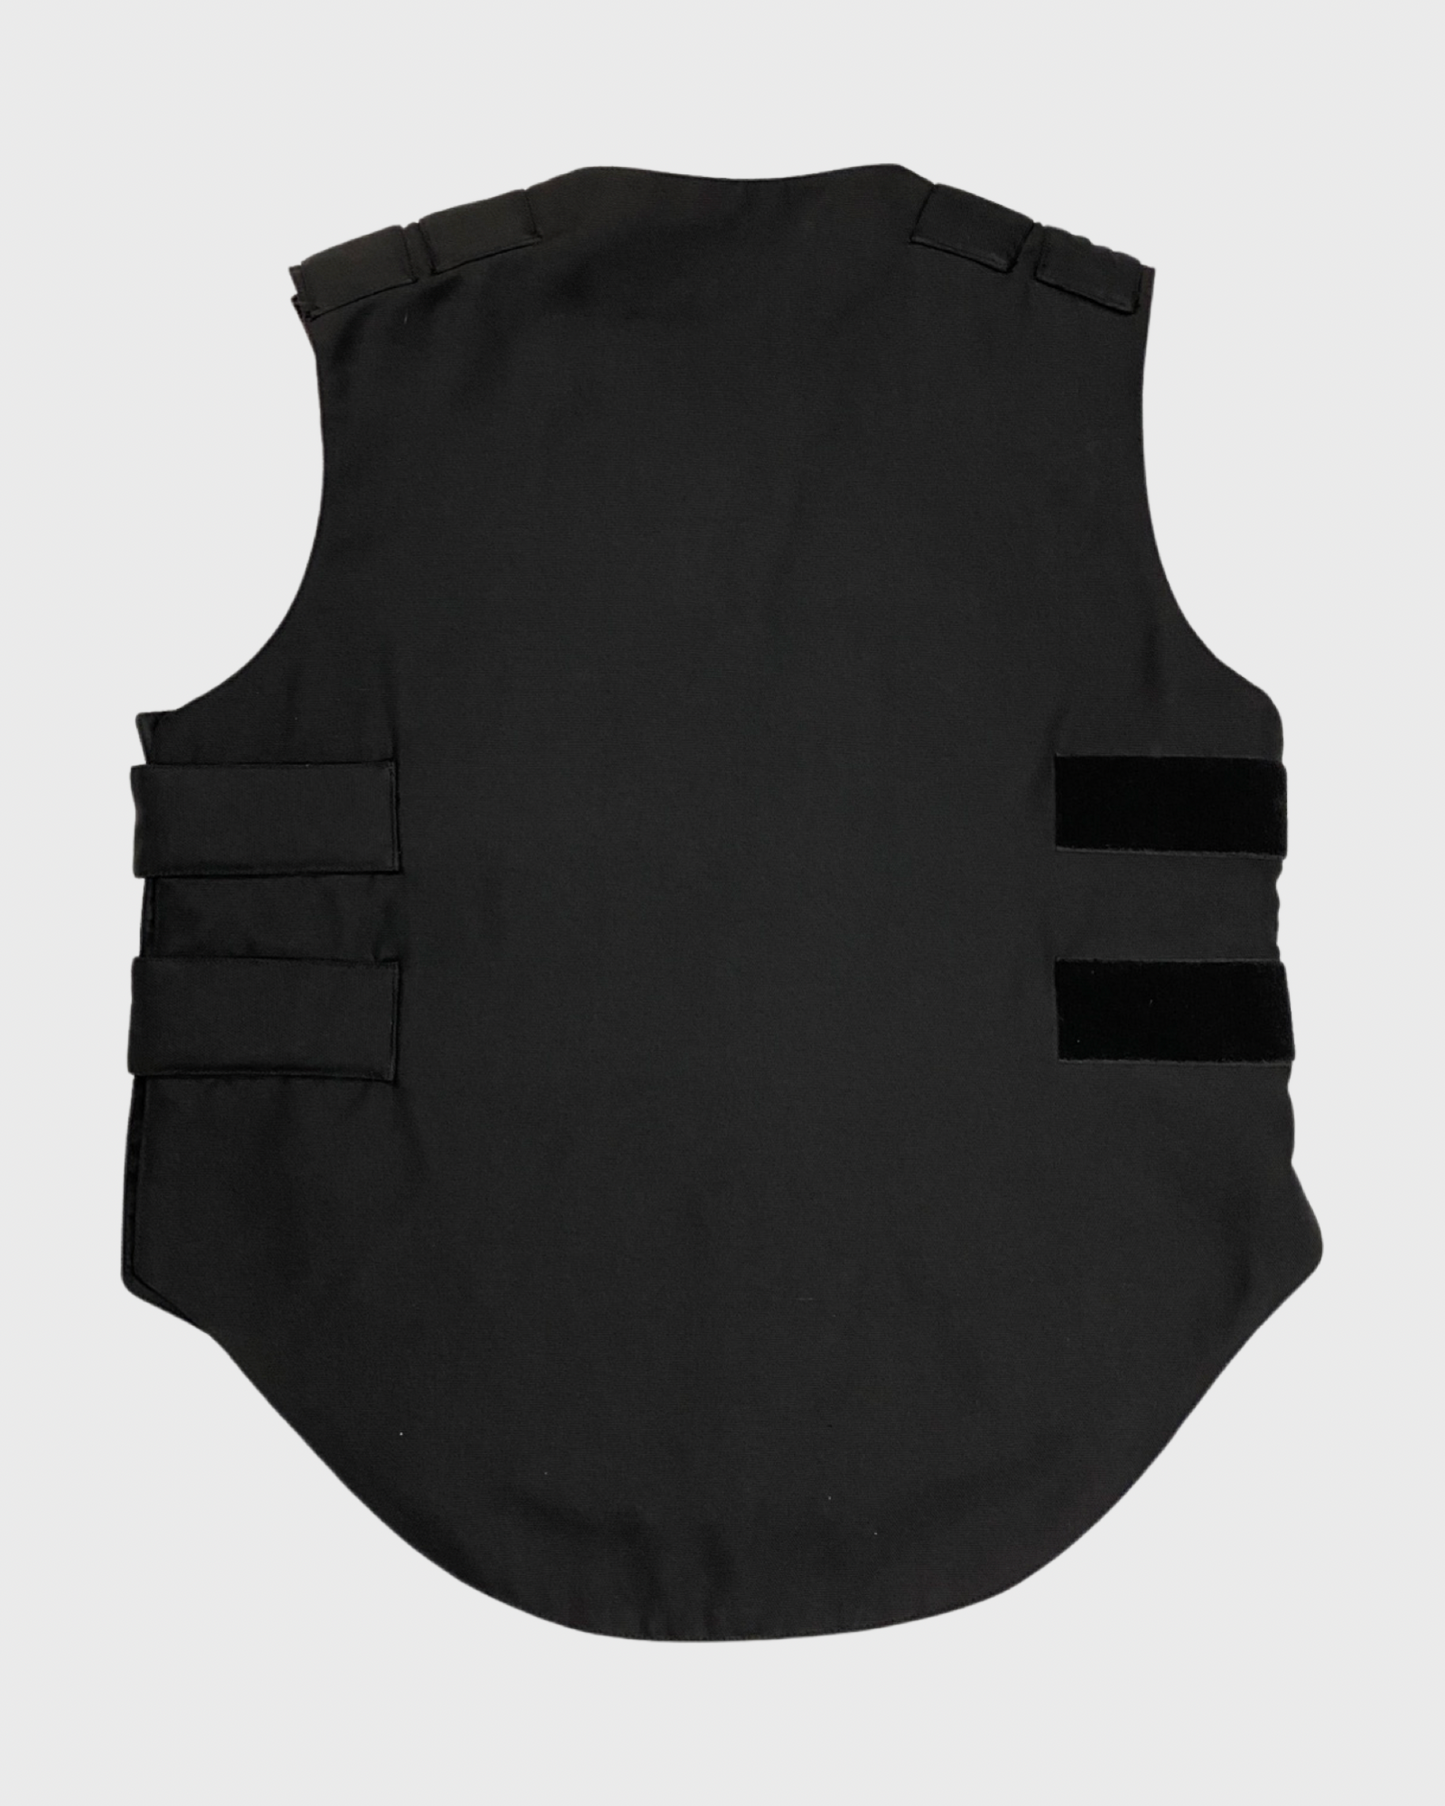 Helmut Lang bulletproof vest from 1998 SZ:50